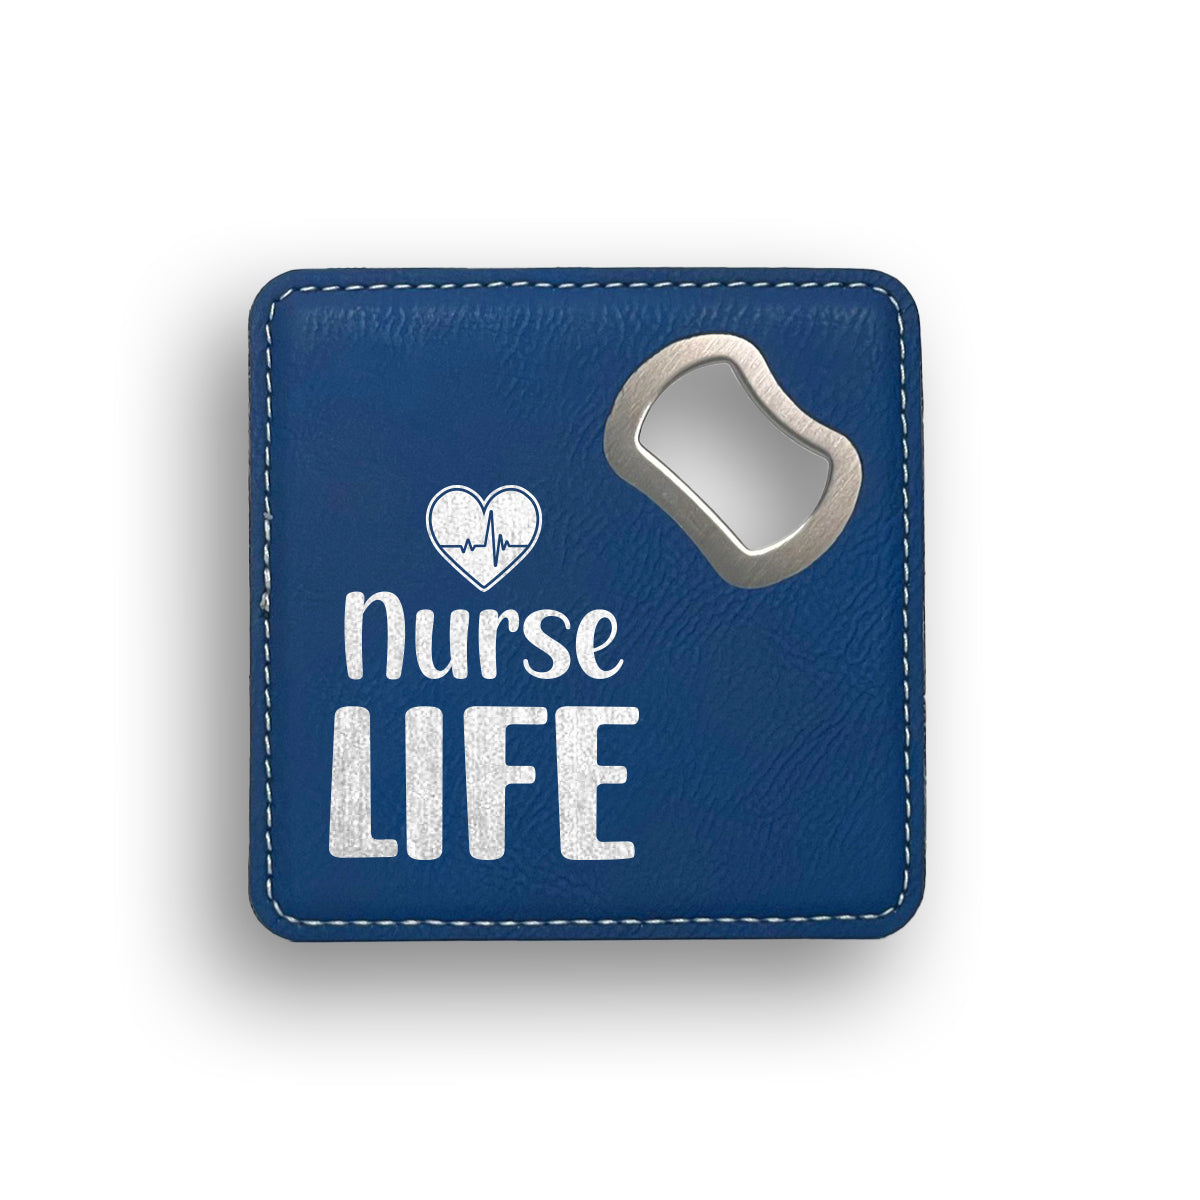 Nurse Life Bottle Opener Coaster